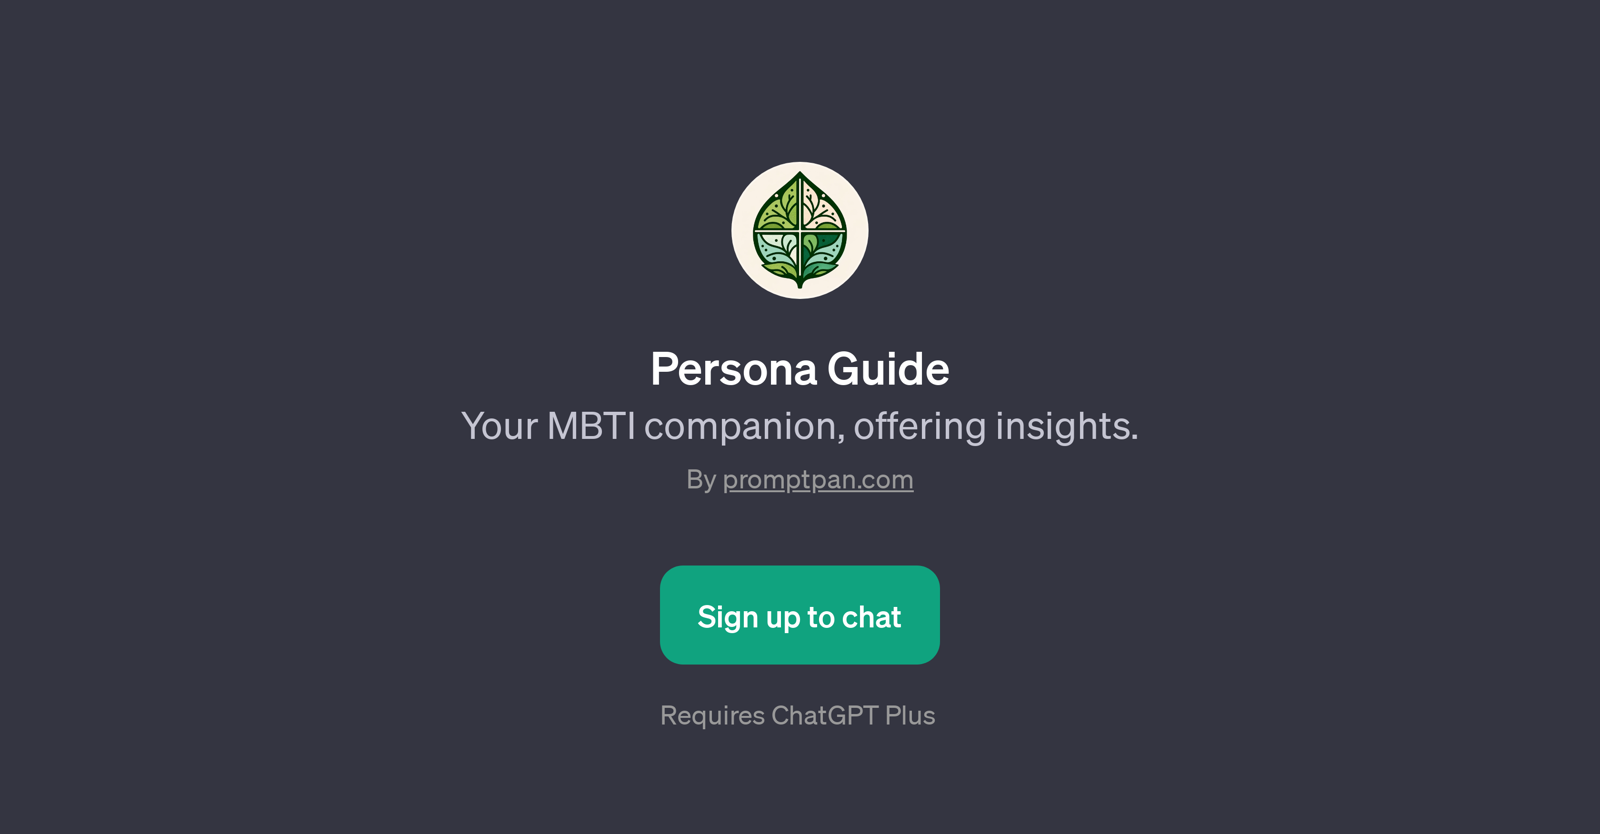 Persona Guide website